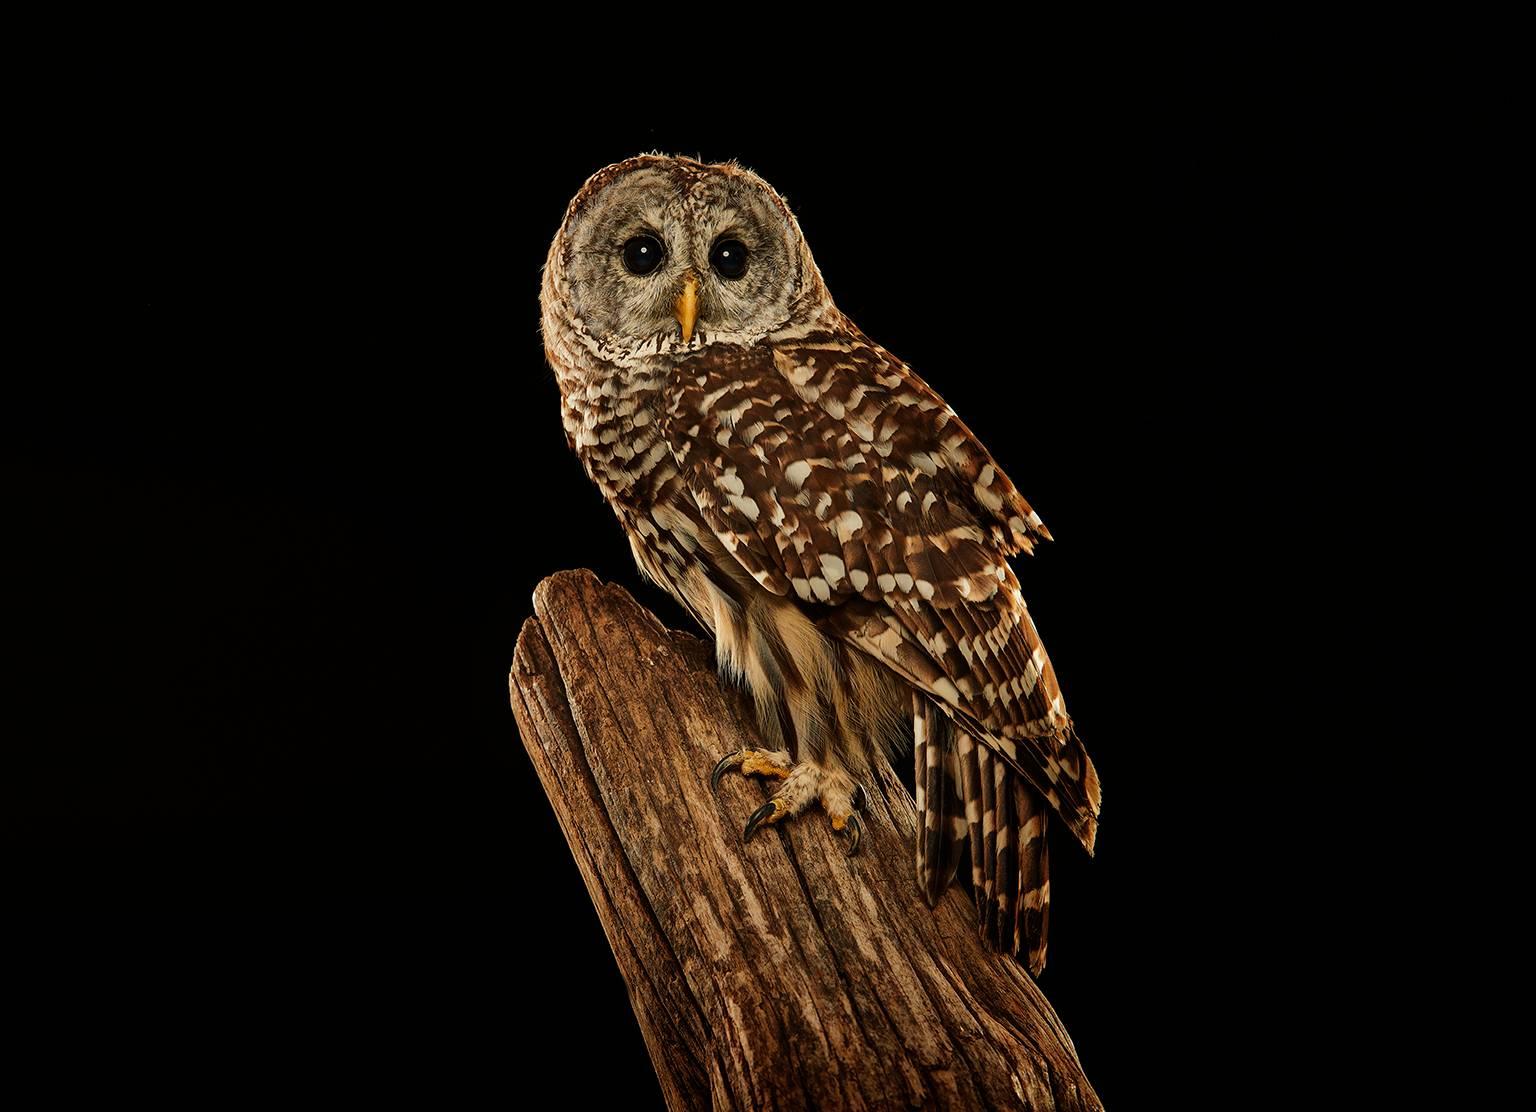 Chris Gordaneer Portrait Photograph - Birds of Prey - Barred Owl No. 10